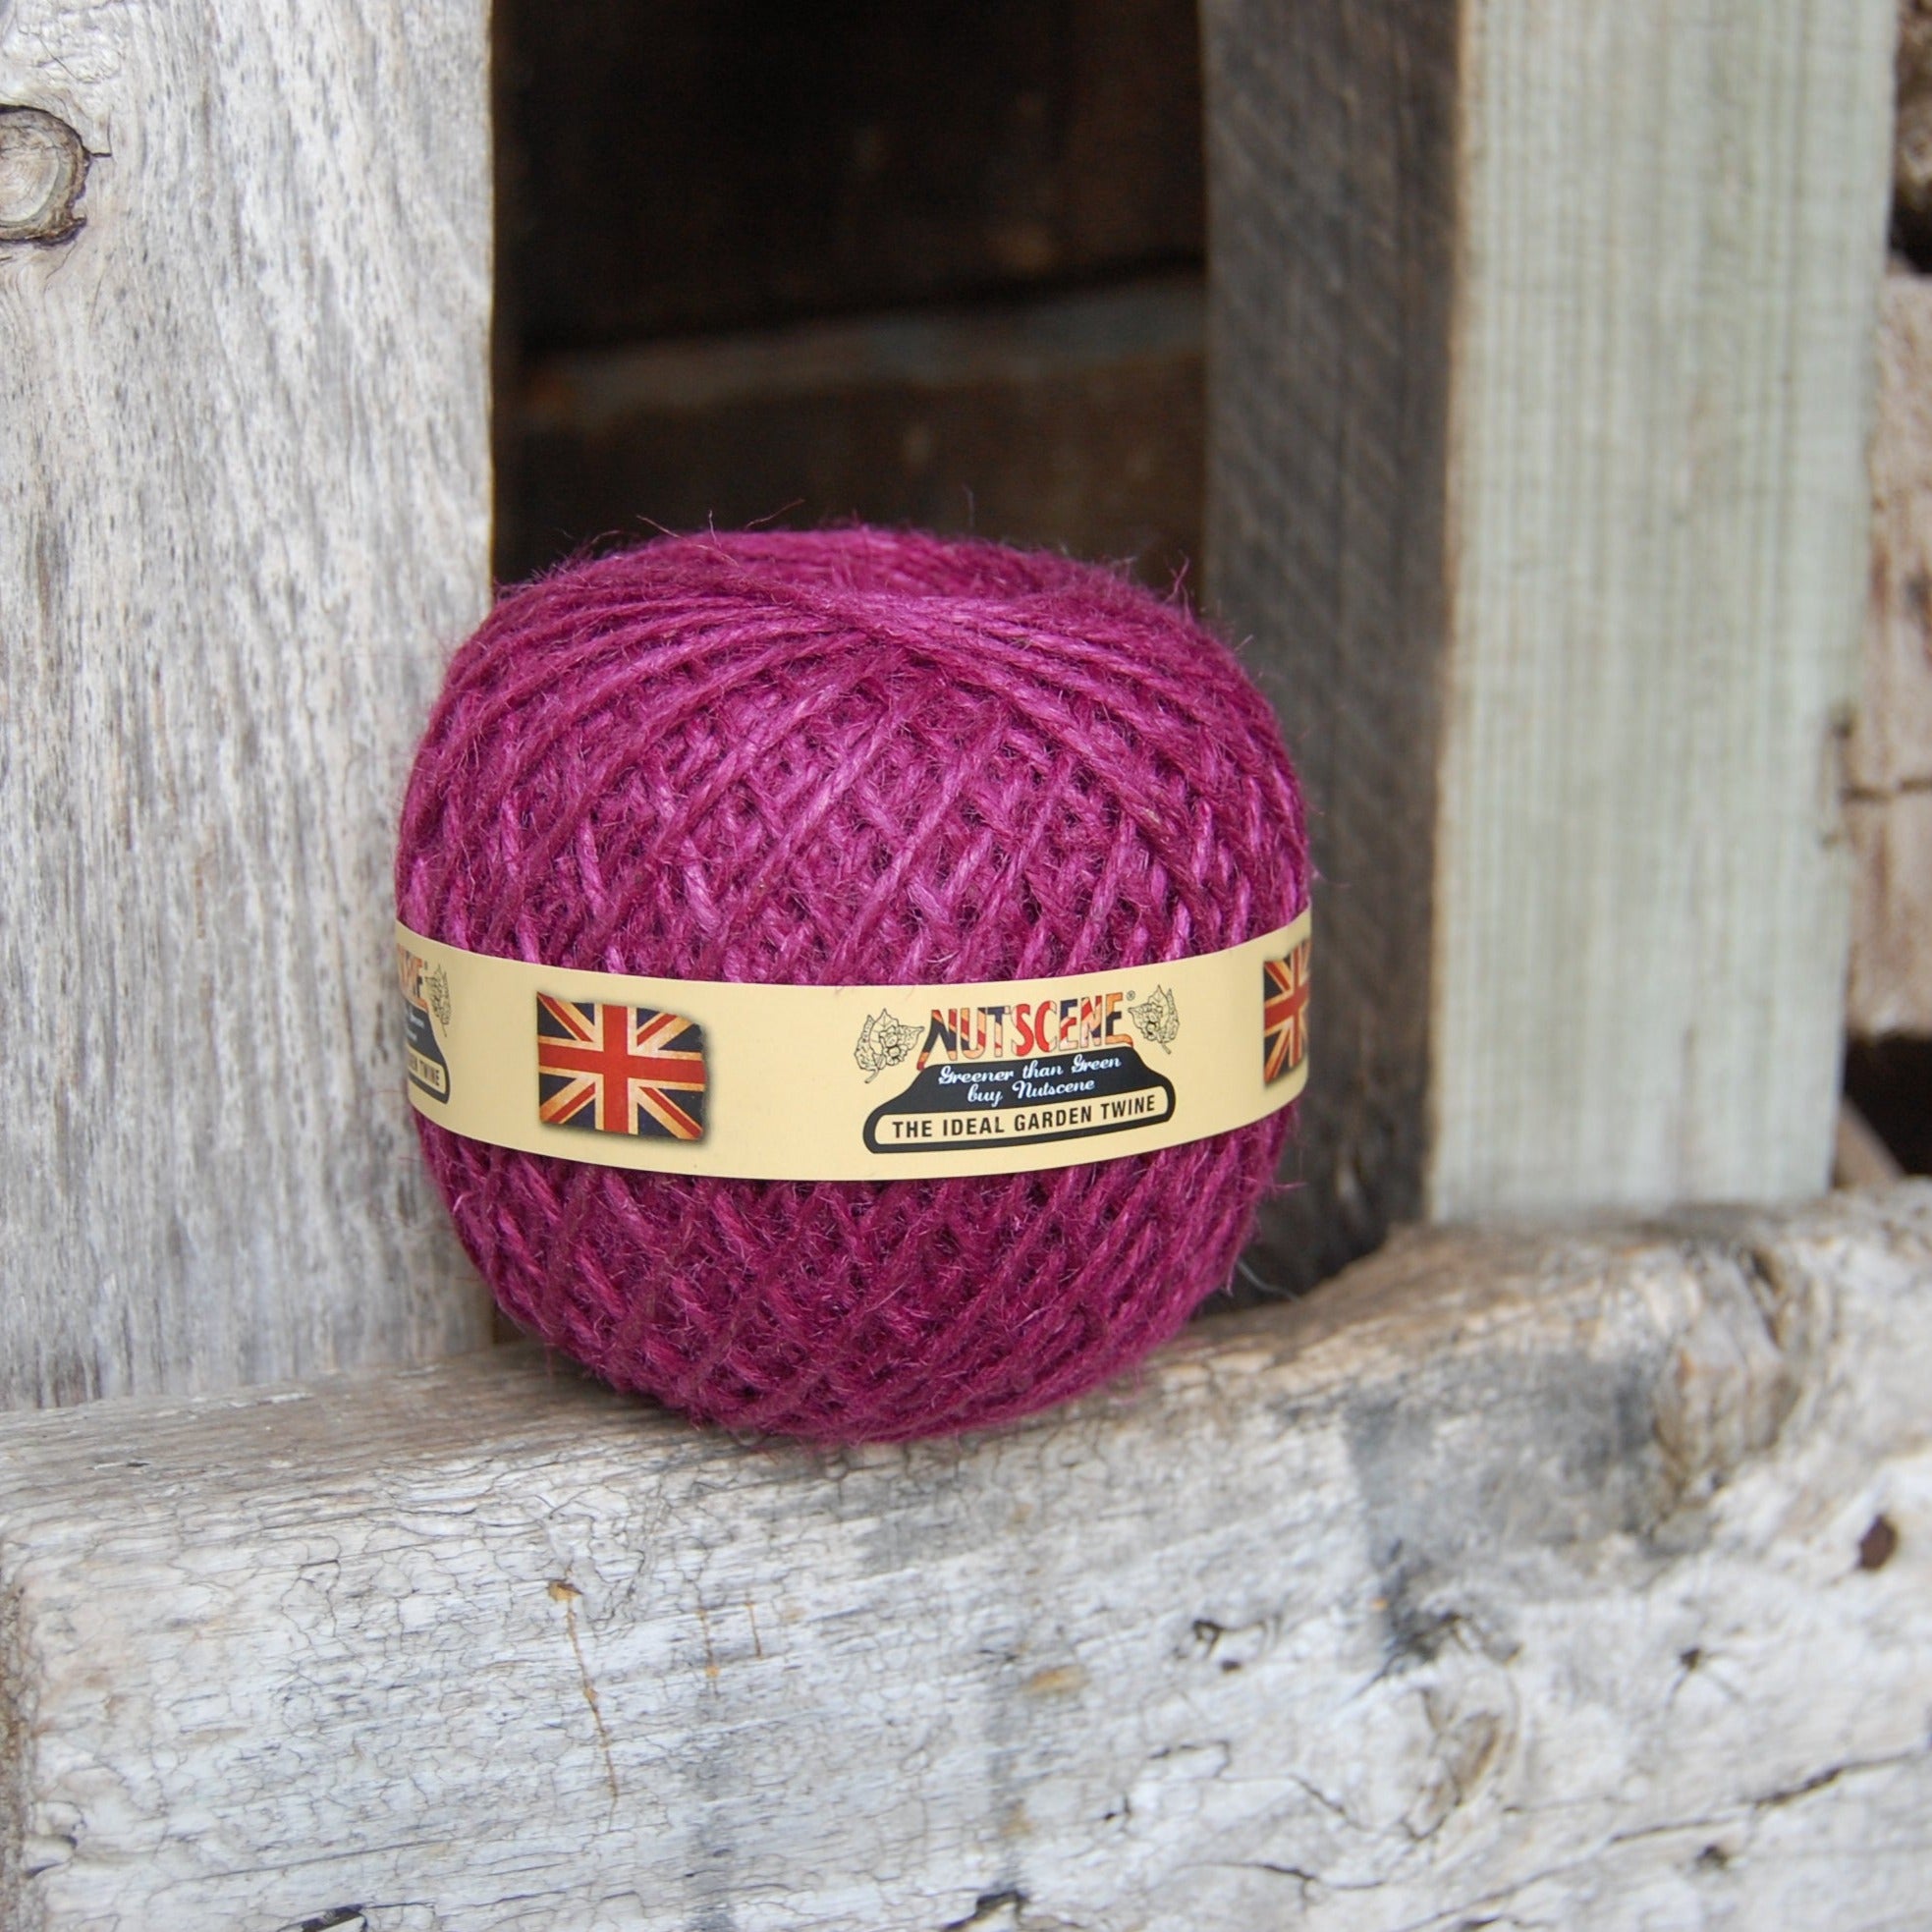 Introducing WOW!®, Our New Jumbo Yarn